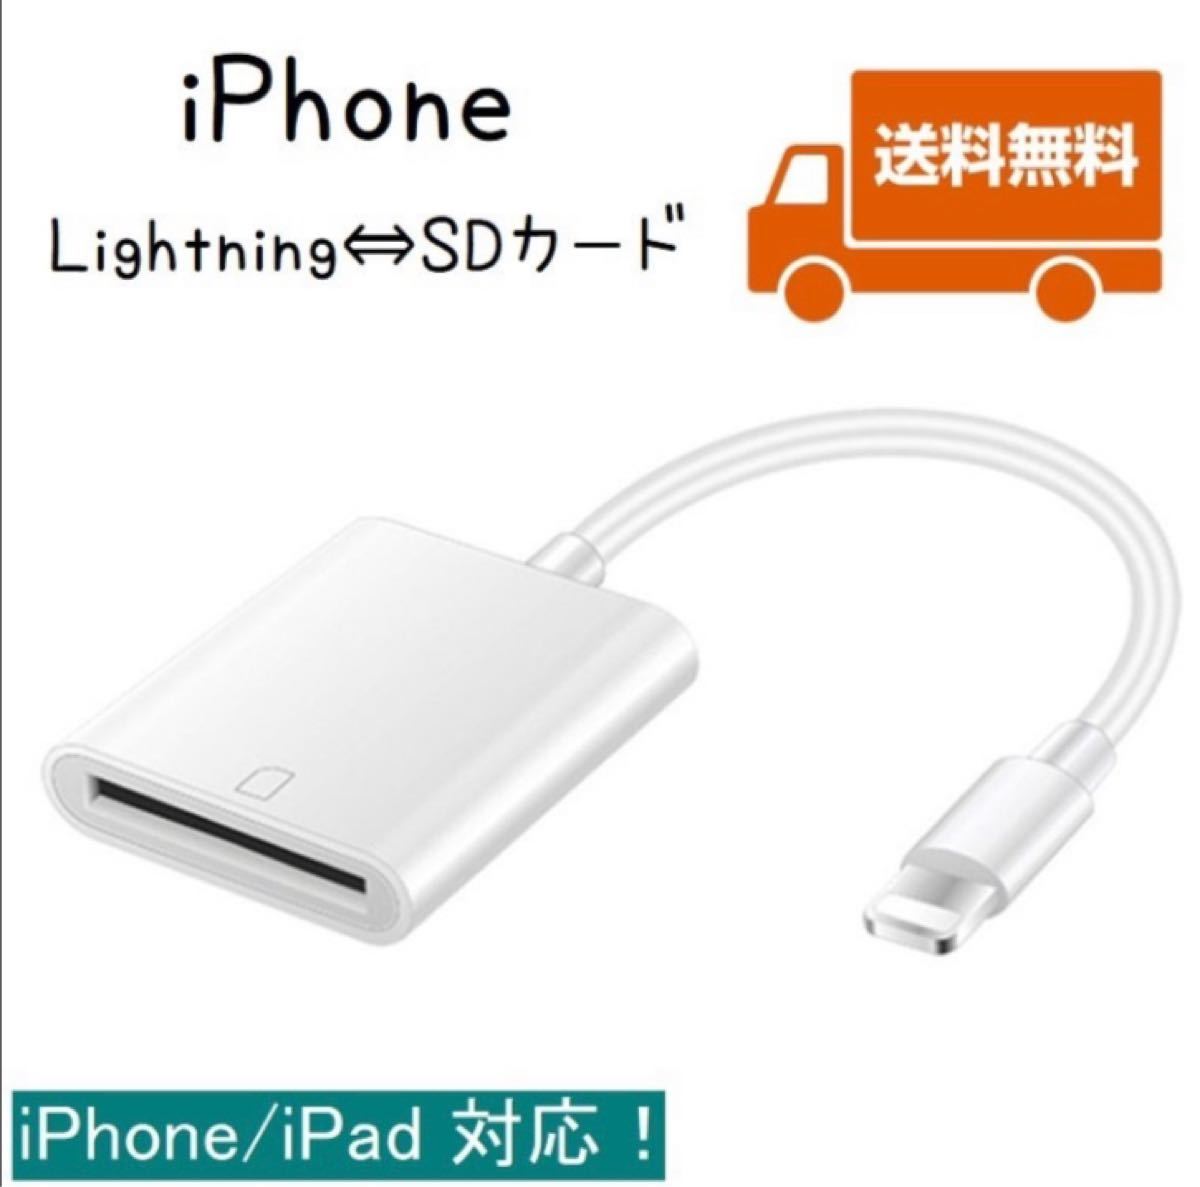 iPhone SDカードリーダー SDカード iPhone iPad アップル製品専用 写真転送 データ転送 